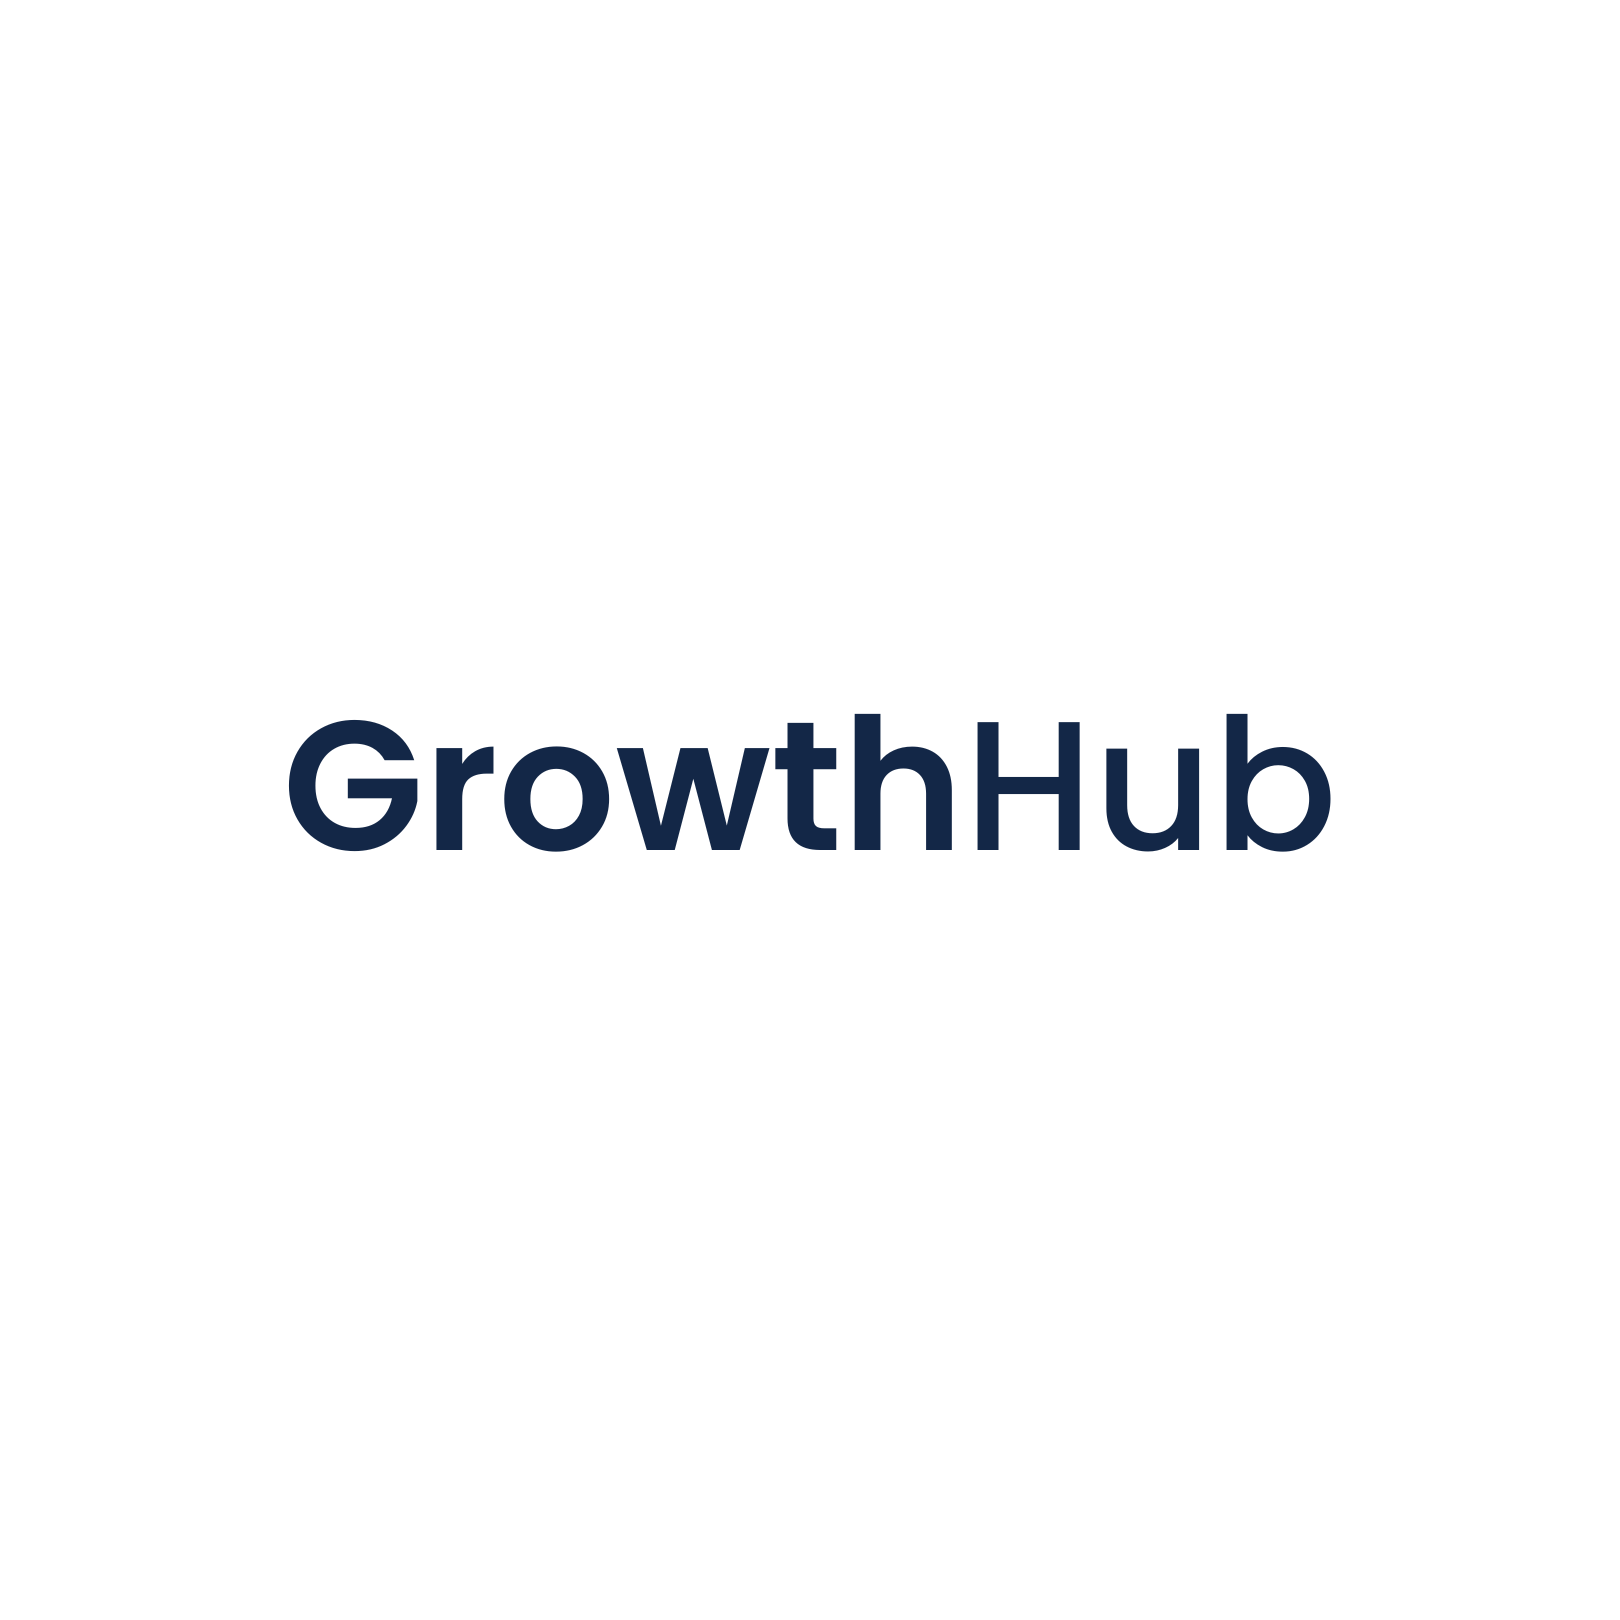 Copy of GrowthHub-Biru